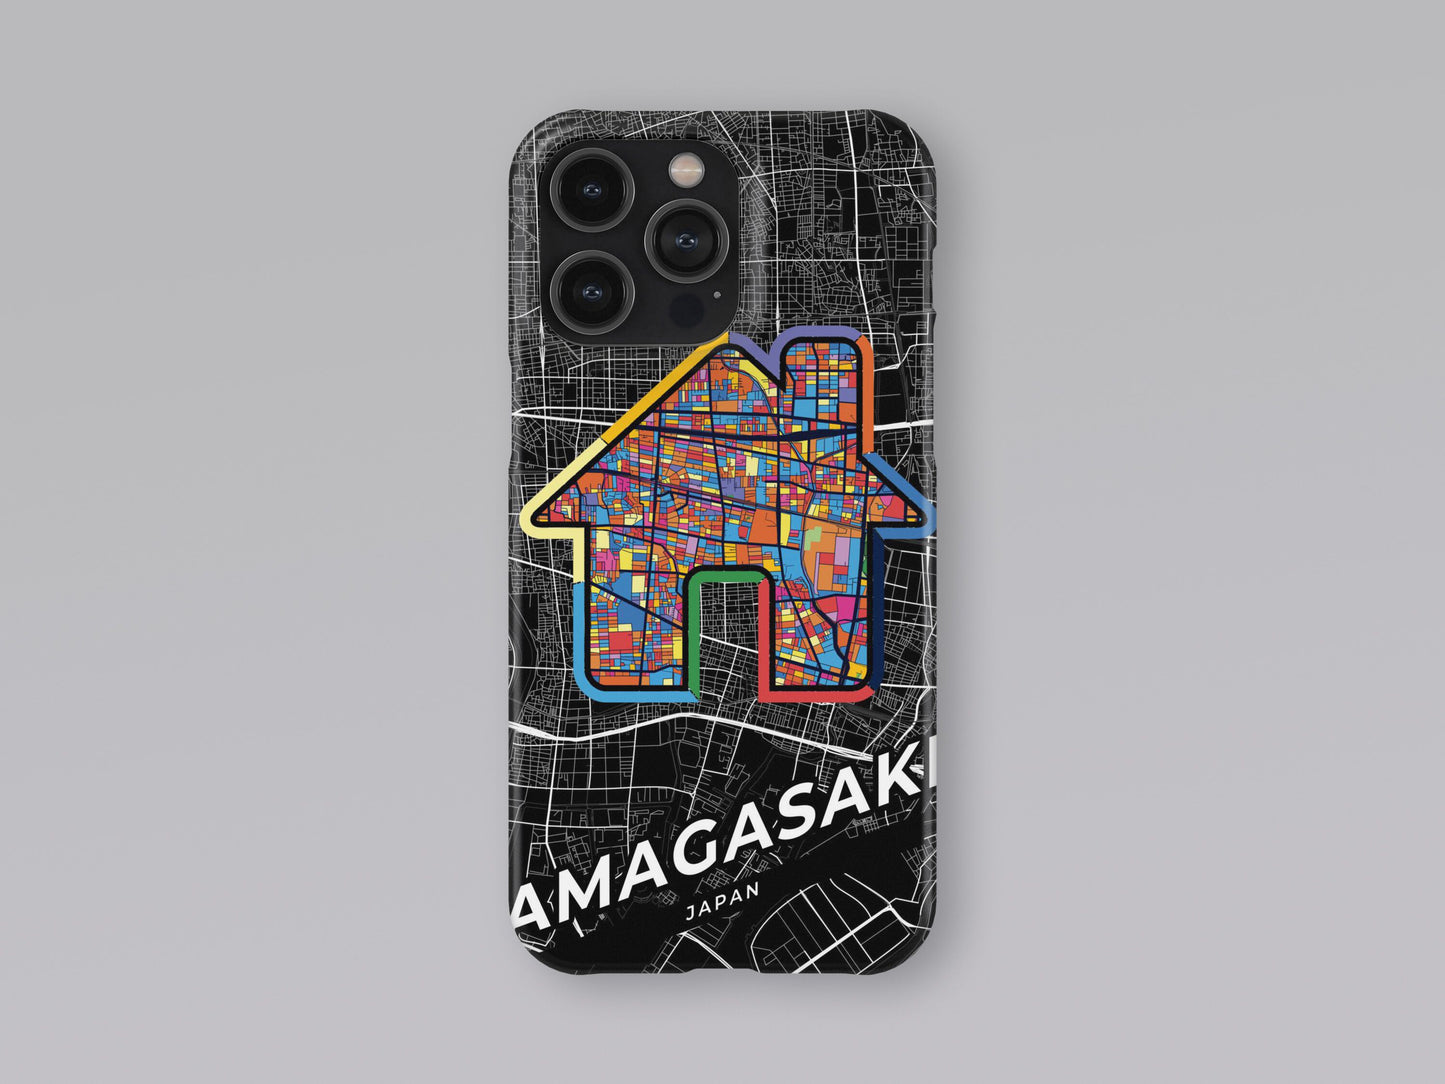 Amagasaki Japan slim phone case with colorful icon. Birthday, wedding or housewarming gift. Couple match cases. 3